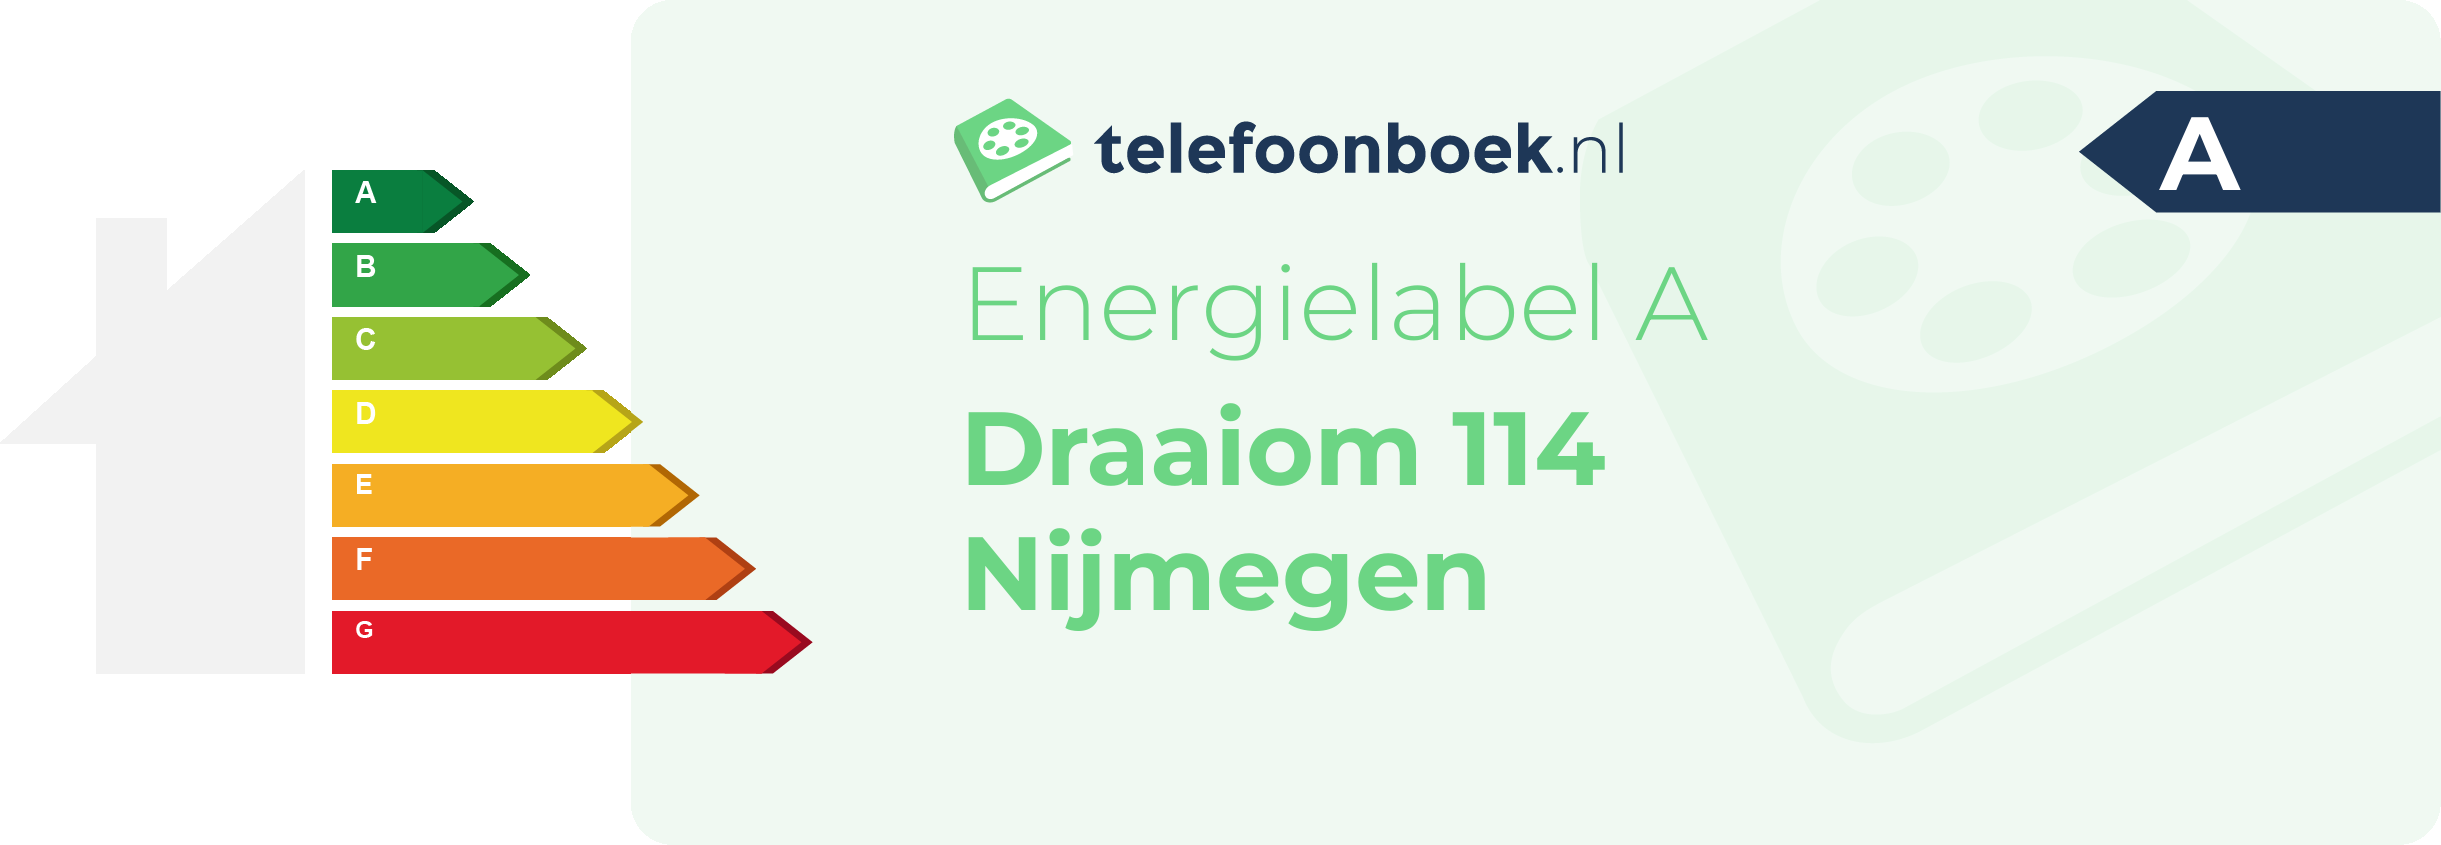 Energielabel Draaiom 114 Nijmegen